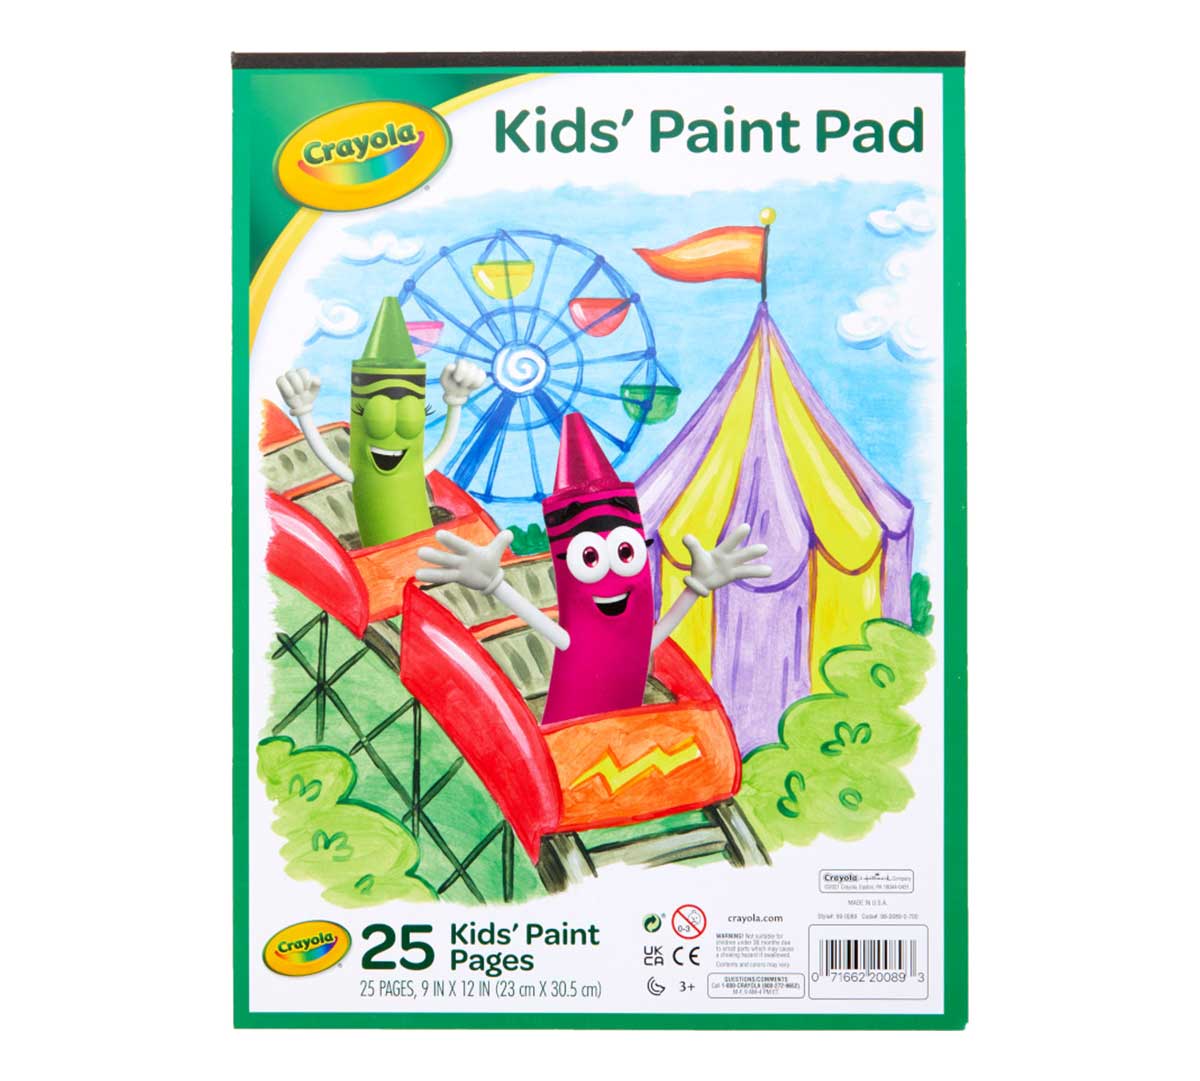 https://shop.crayola.com/on/demandware.static/-/Sites-crayola-storefront/default/dw00acd423/images/99-0089-0-700_Kids-Paint-Pad_25-Pages_F1.jpg